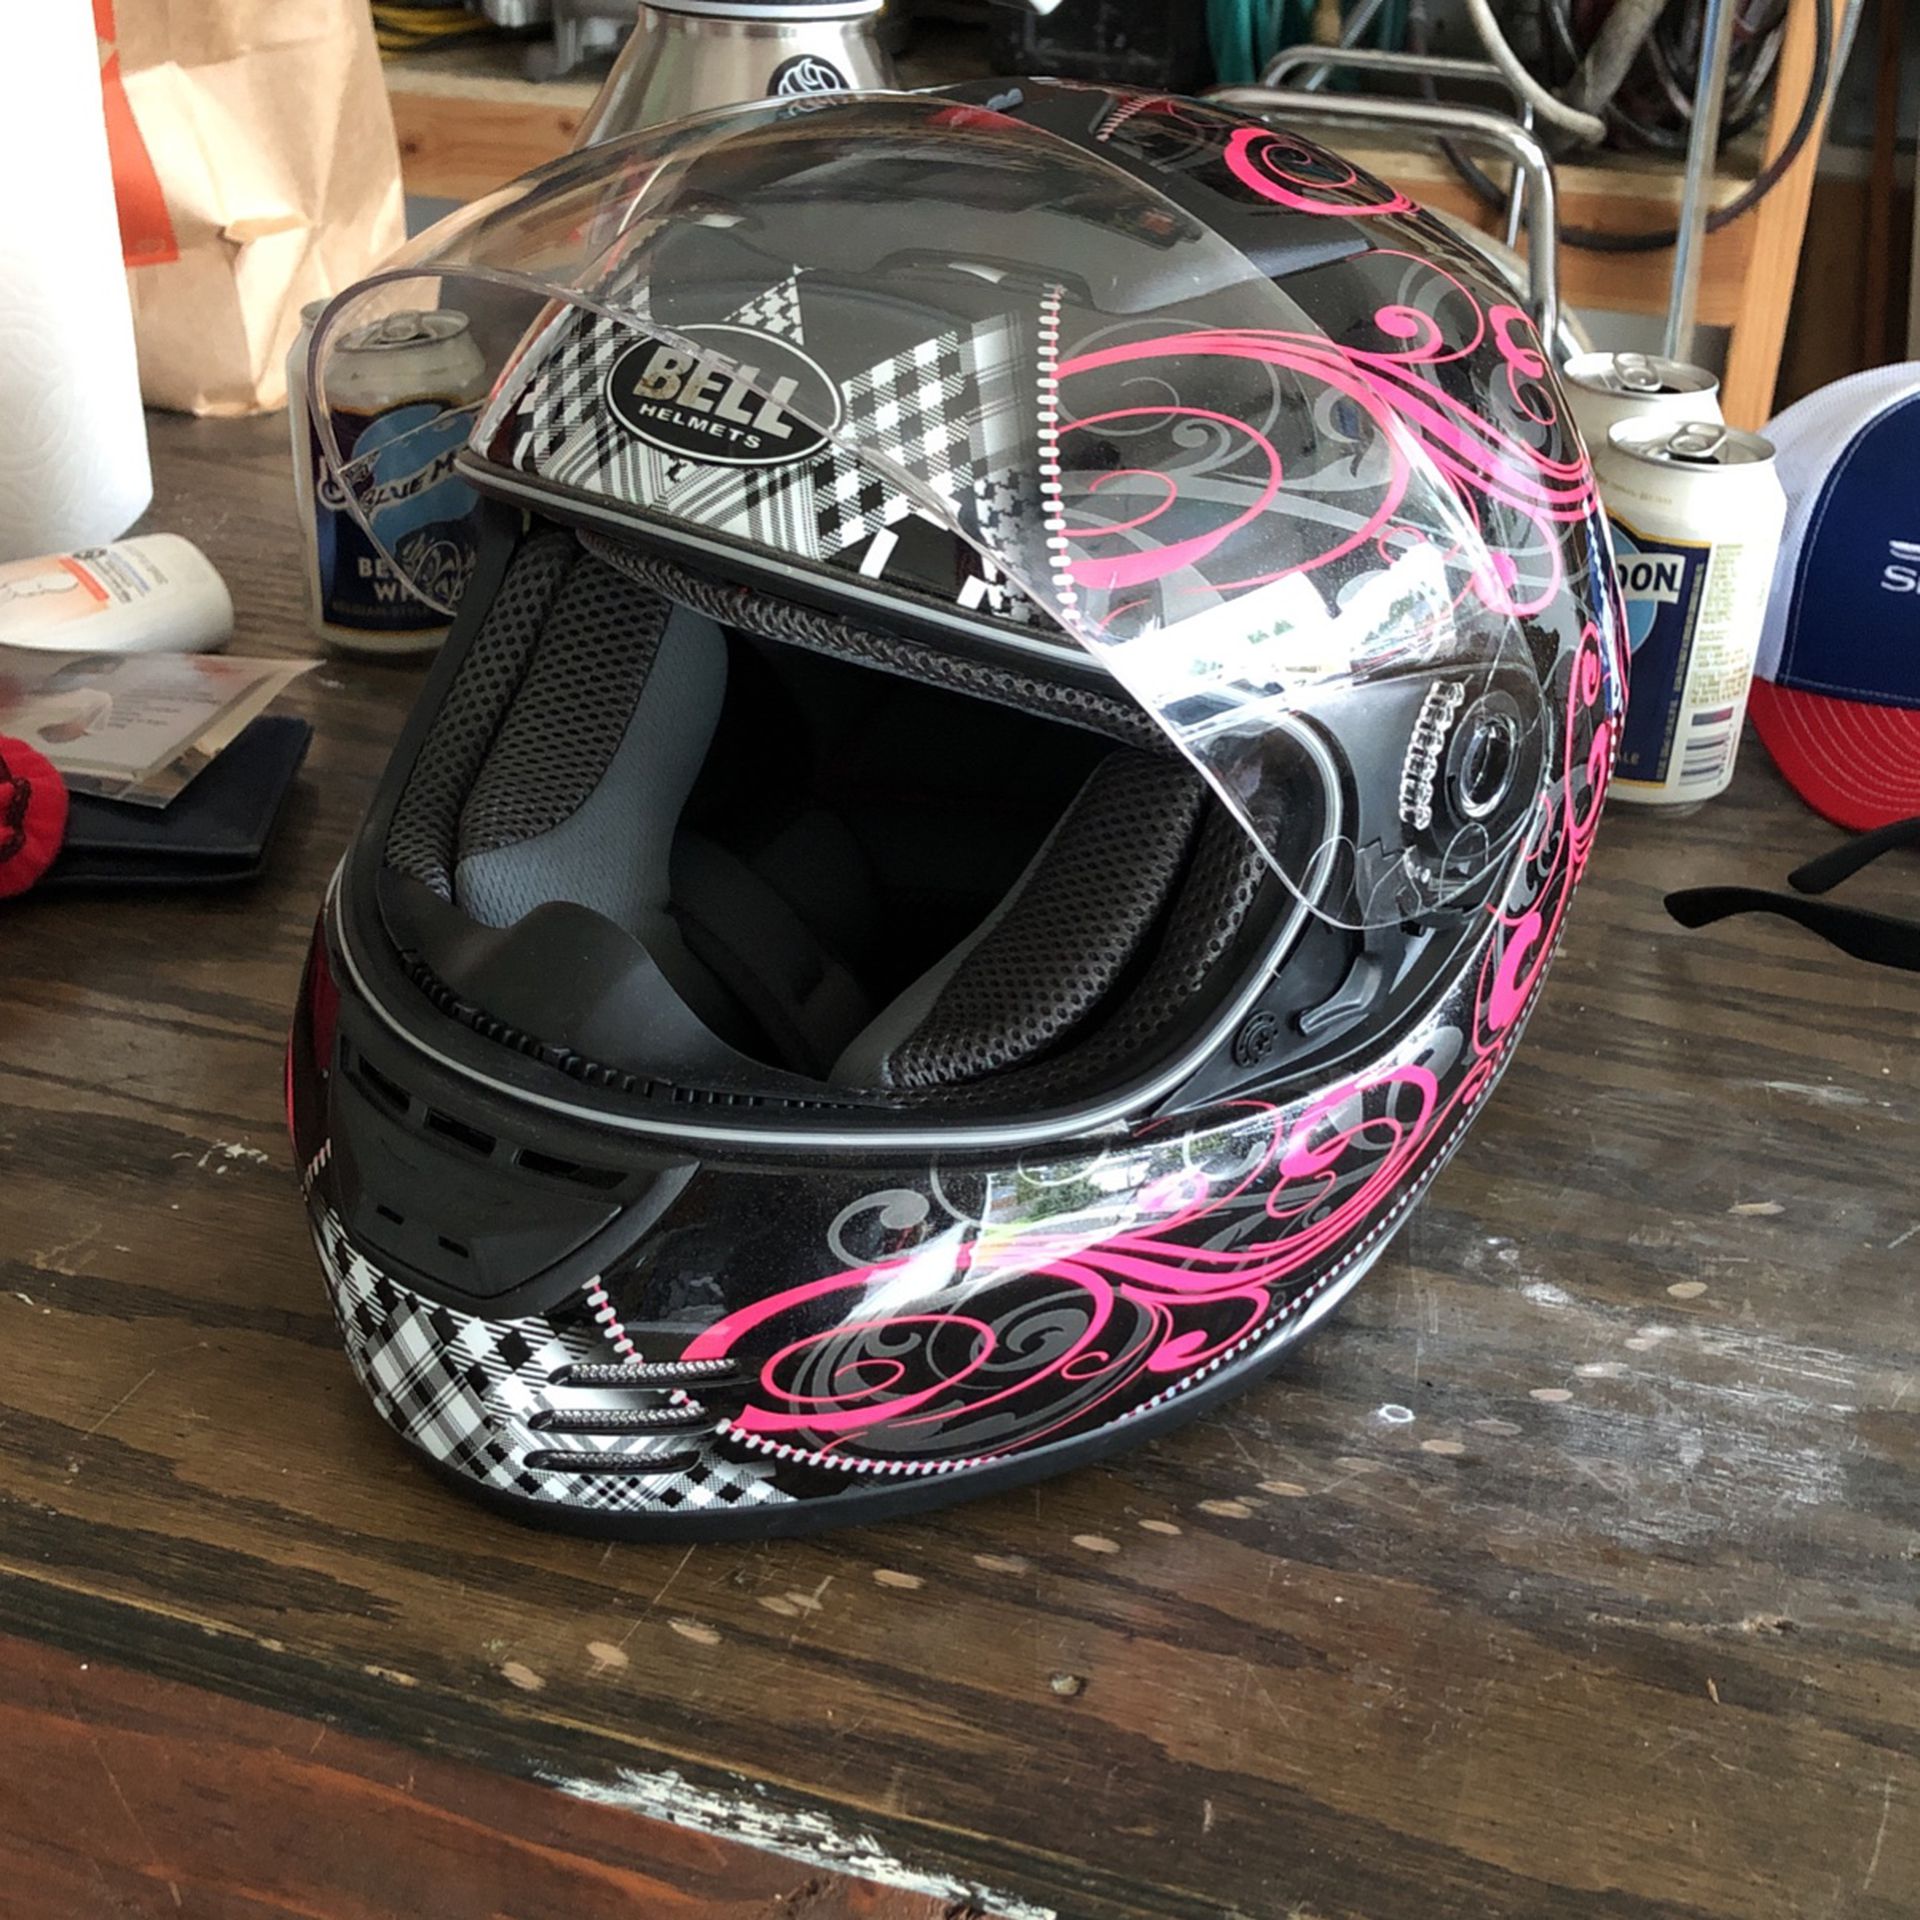 BELL Woman’s Size M Motorcycle Helmet 